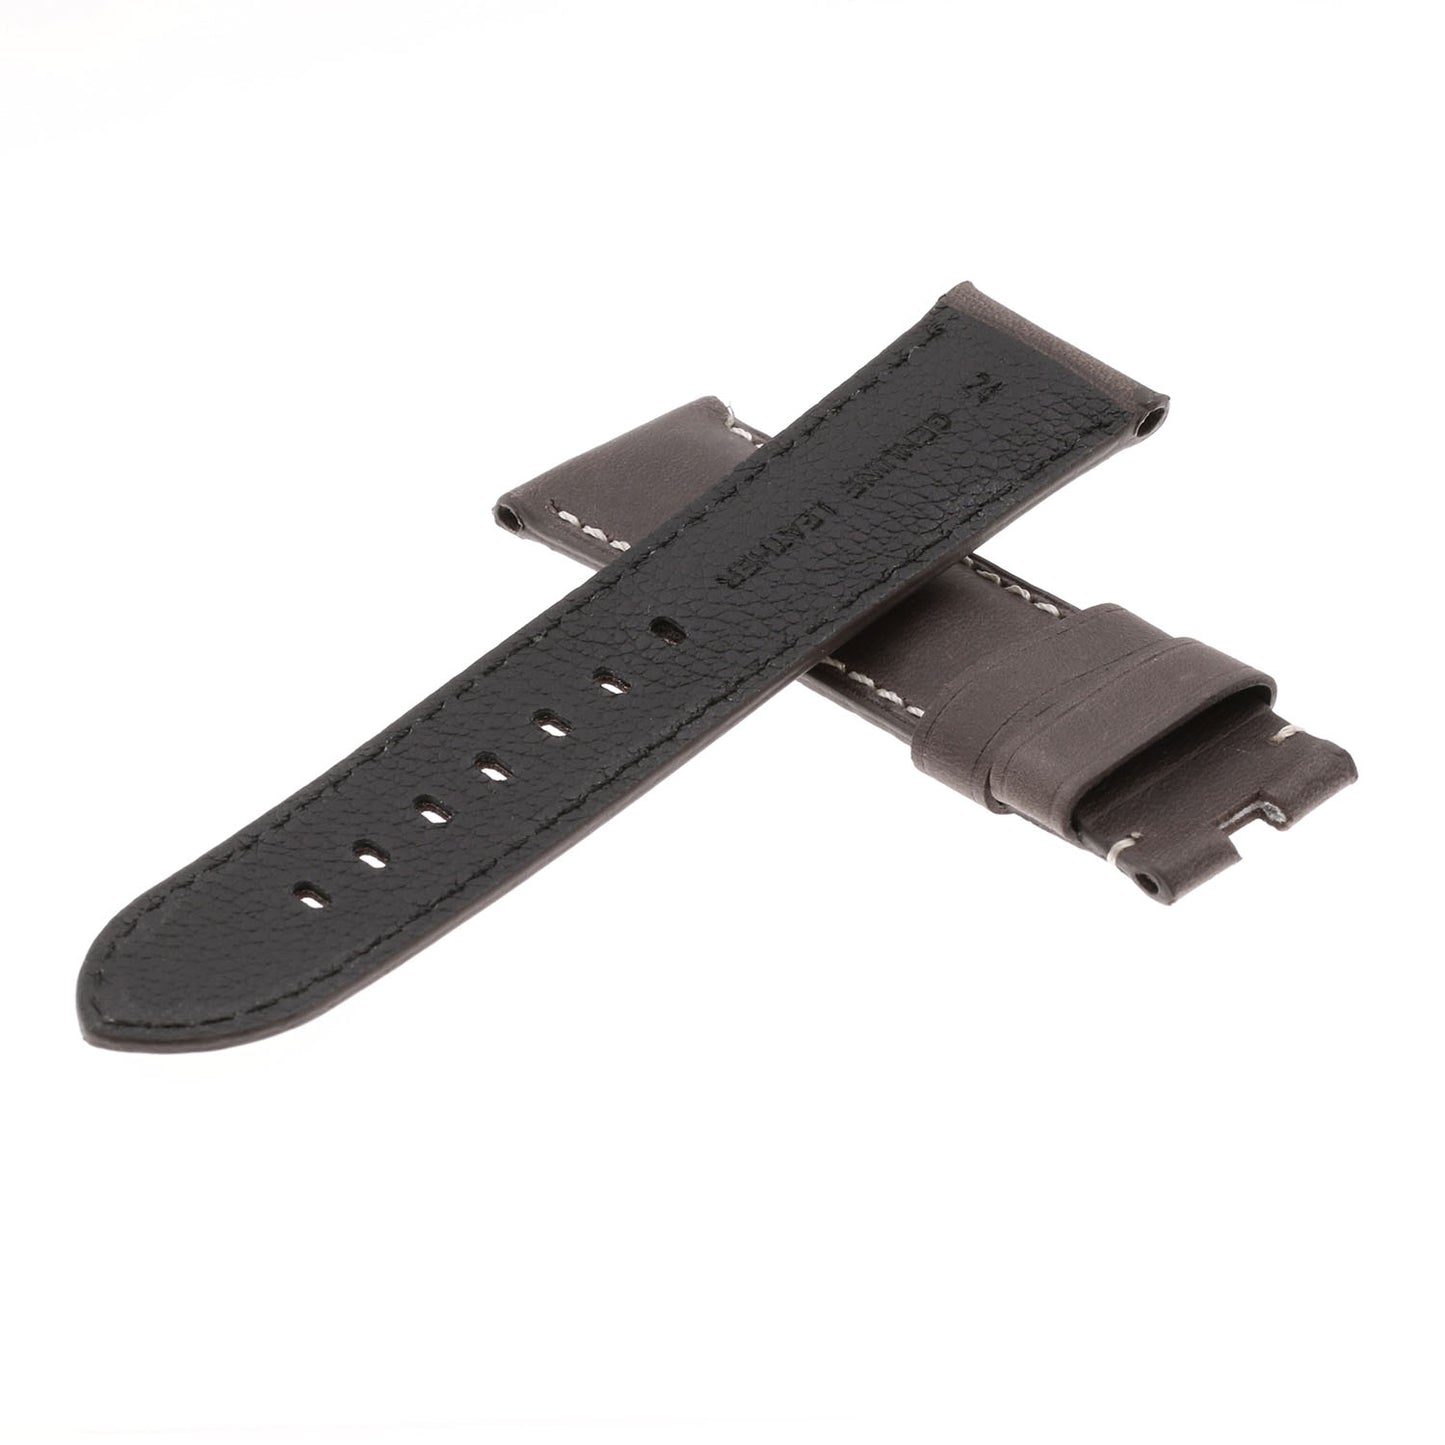 DASSARI Vintage Leather Strap w/ Deployant Clasp (Standard, Long) for Garmin Forerunner 745